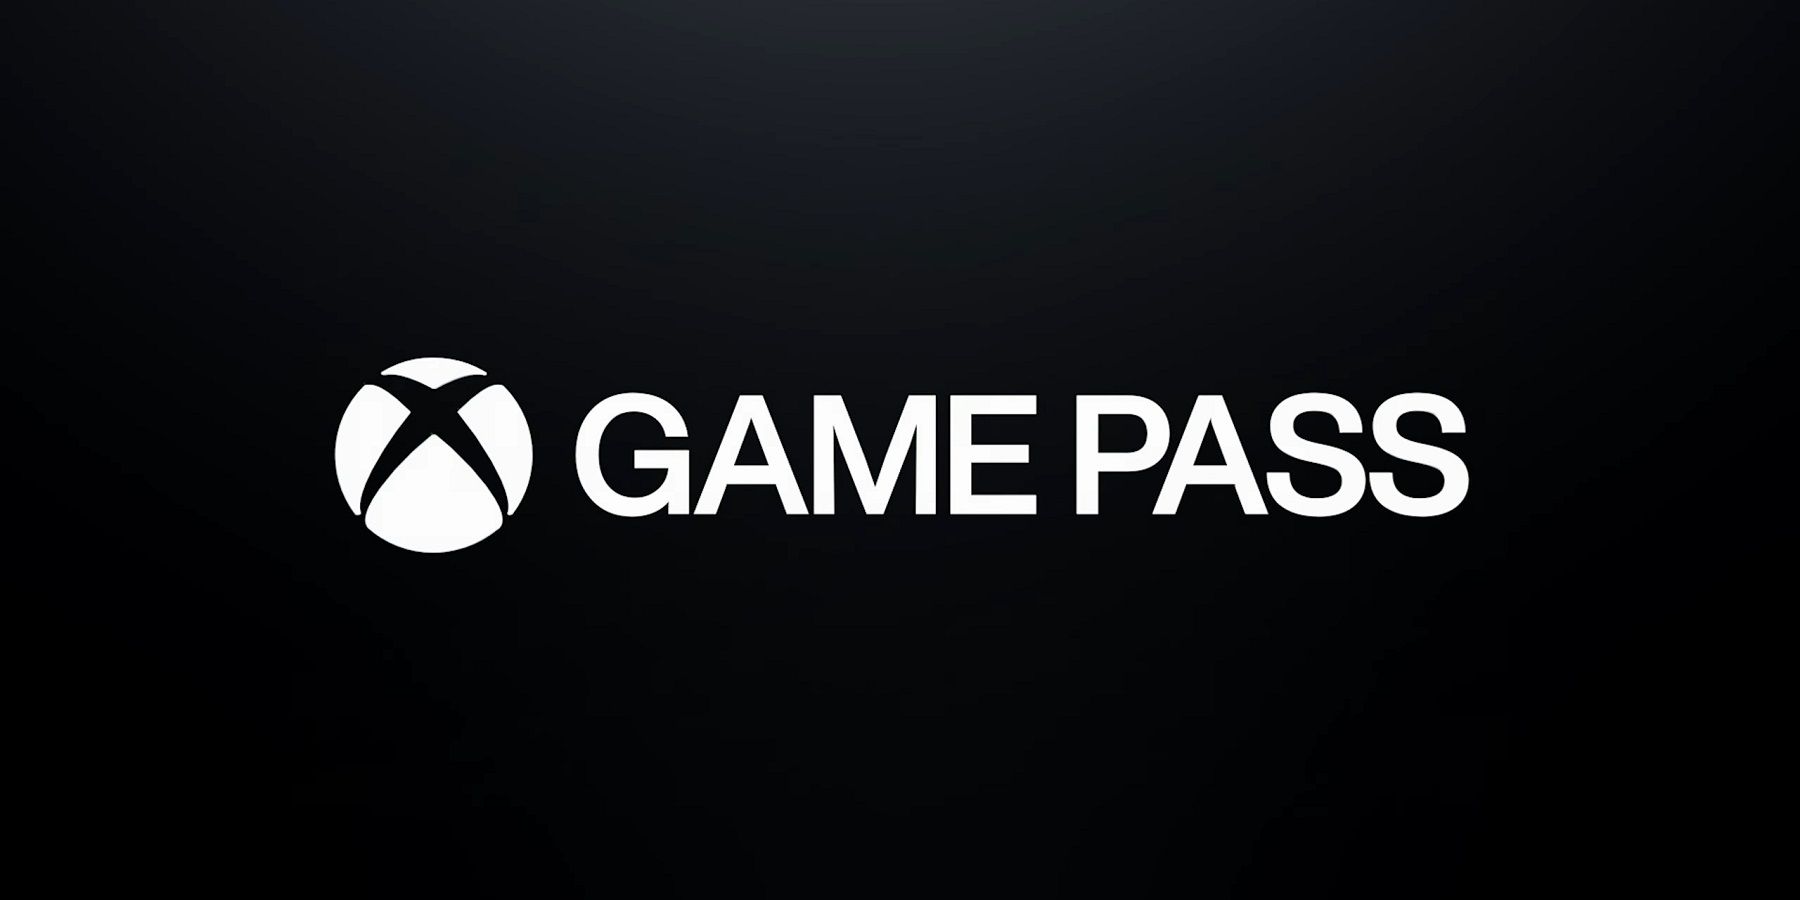 xbox game pass logo black background